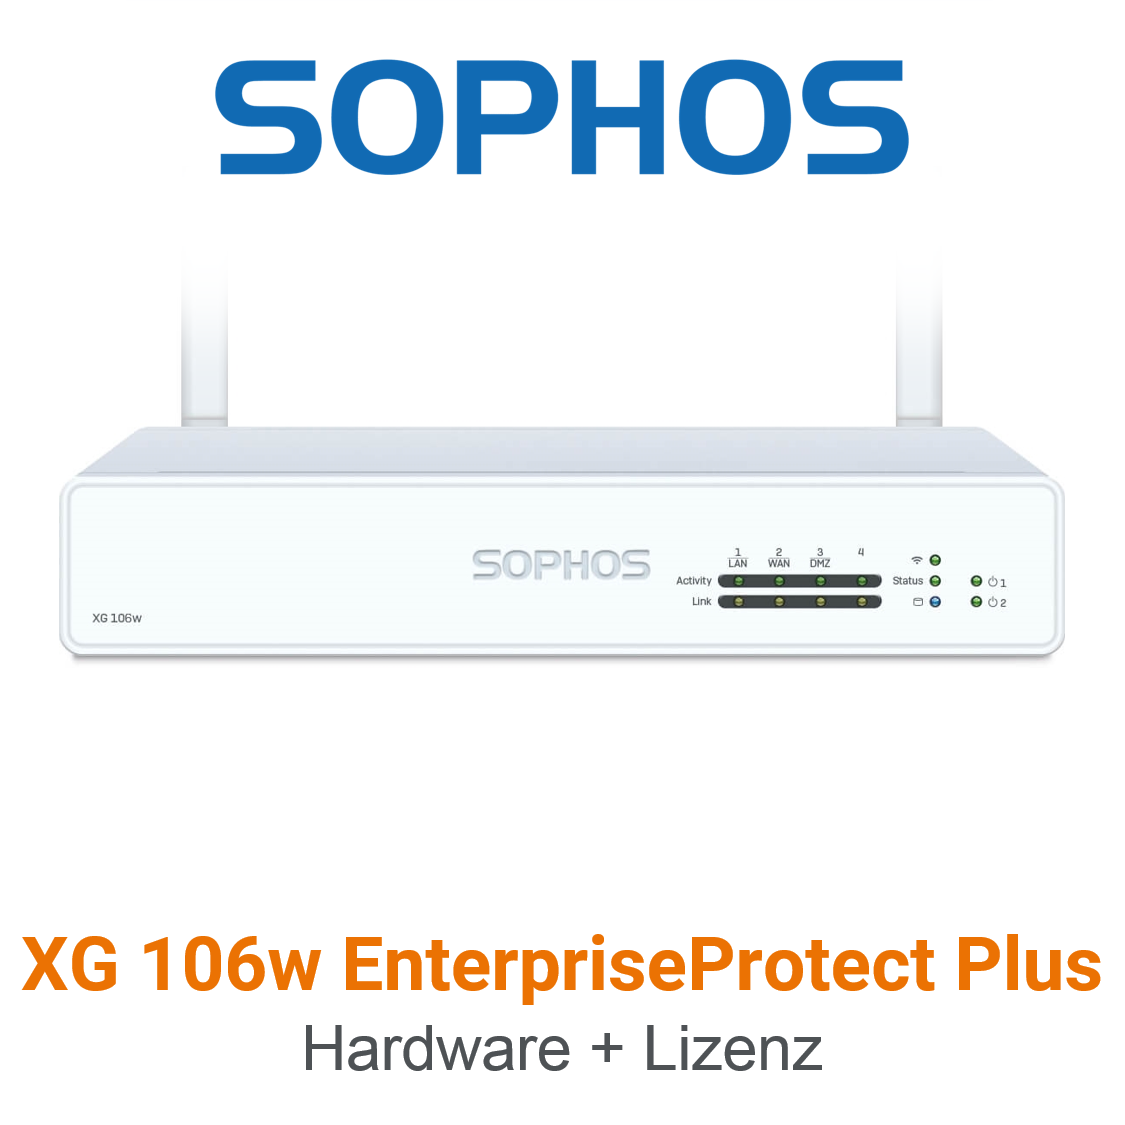 Sophos XG 106w EnterpriseProtect Plus Bundle (Hardware + Lizenz)